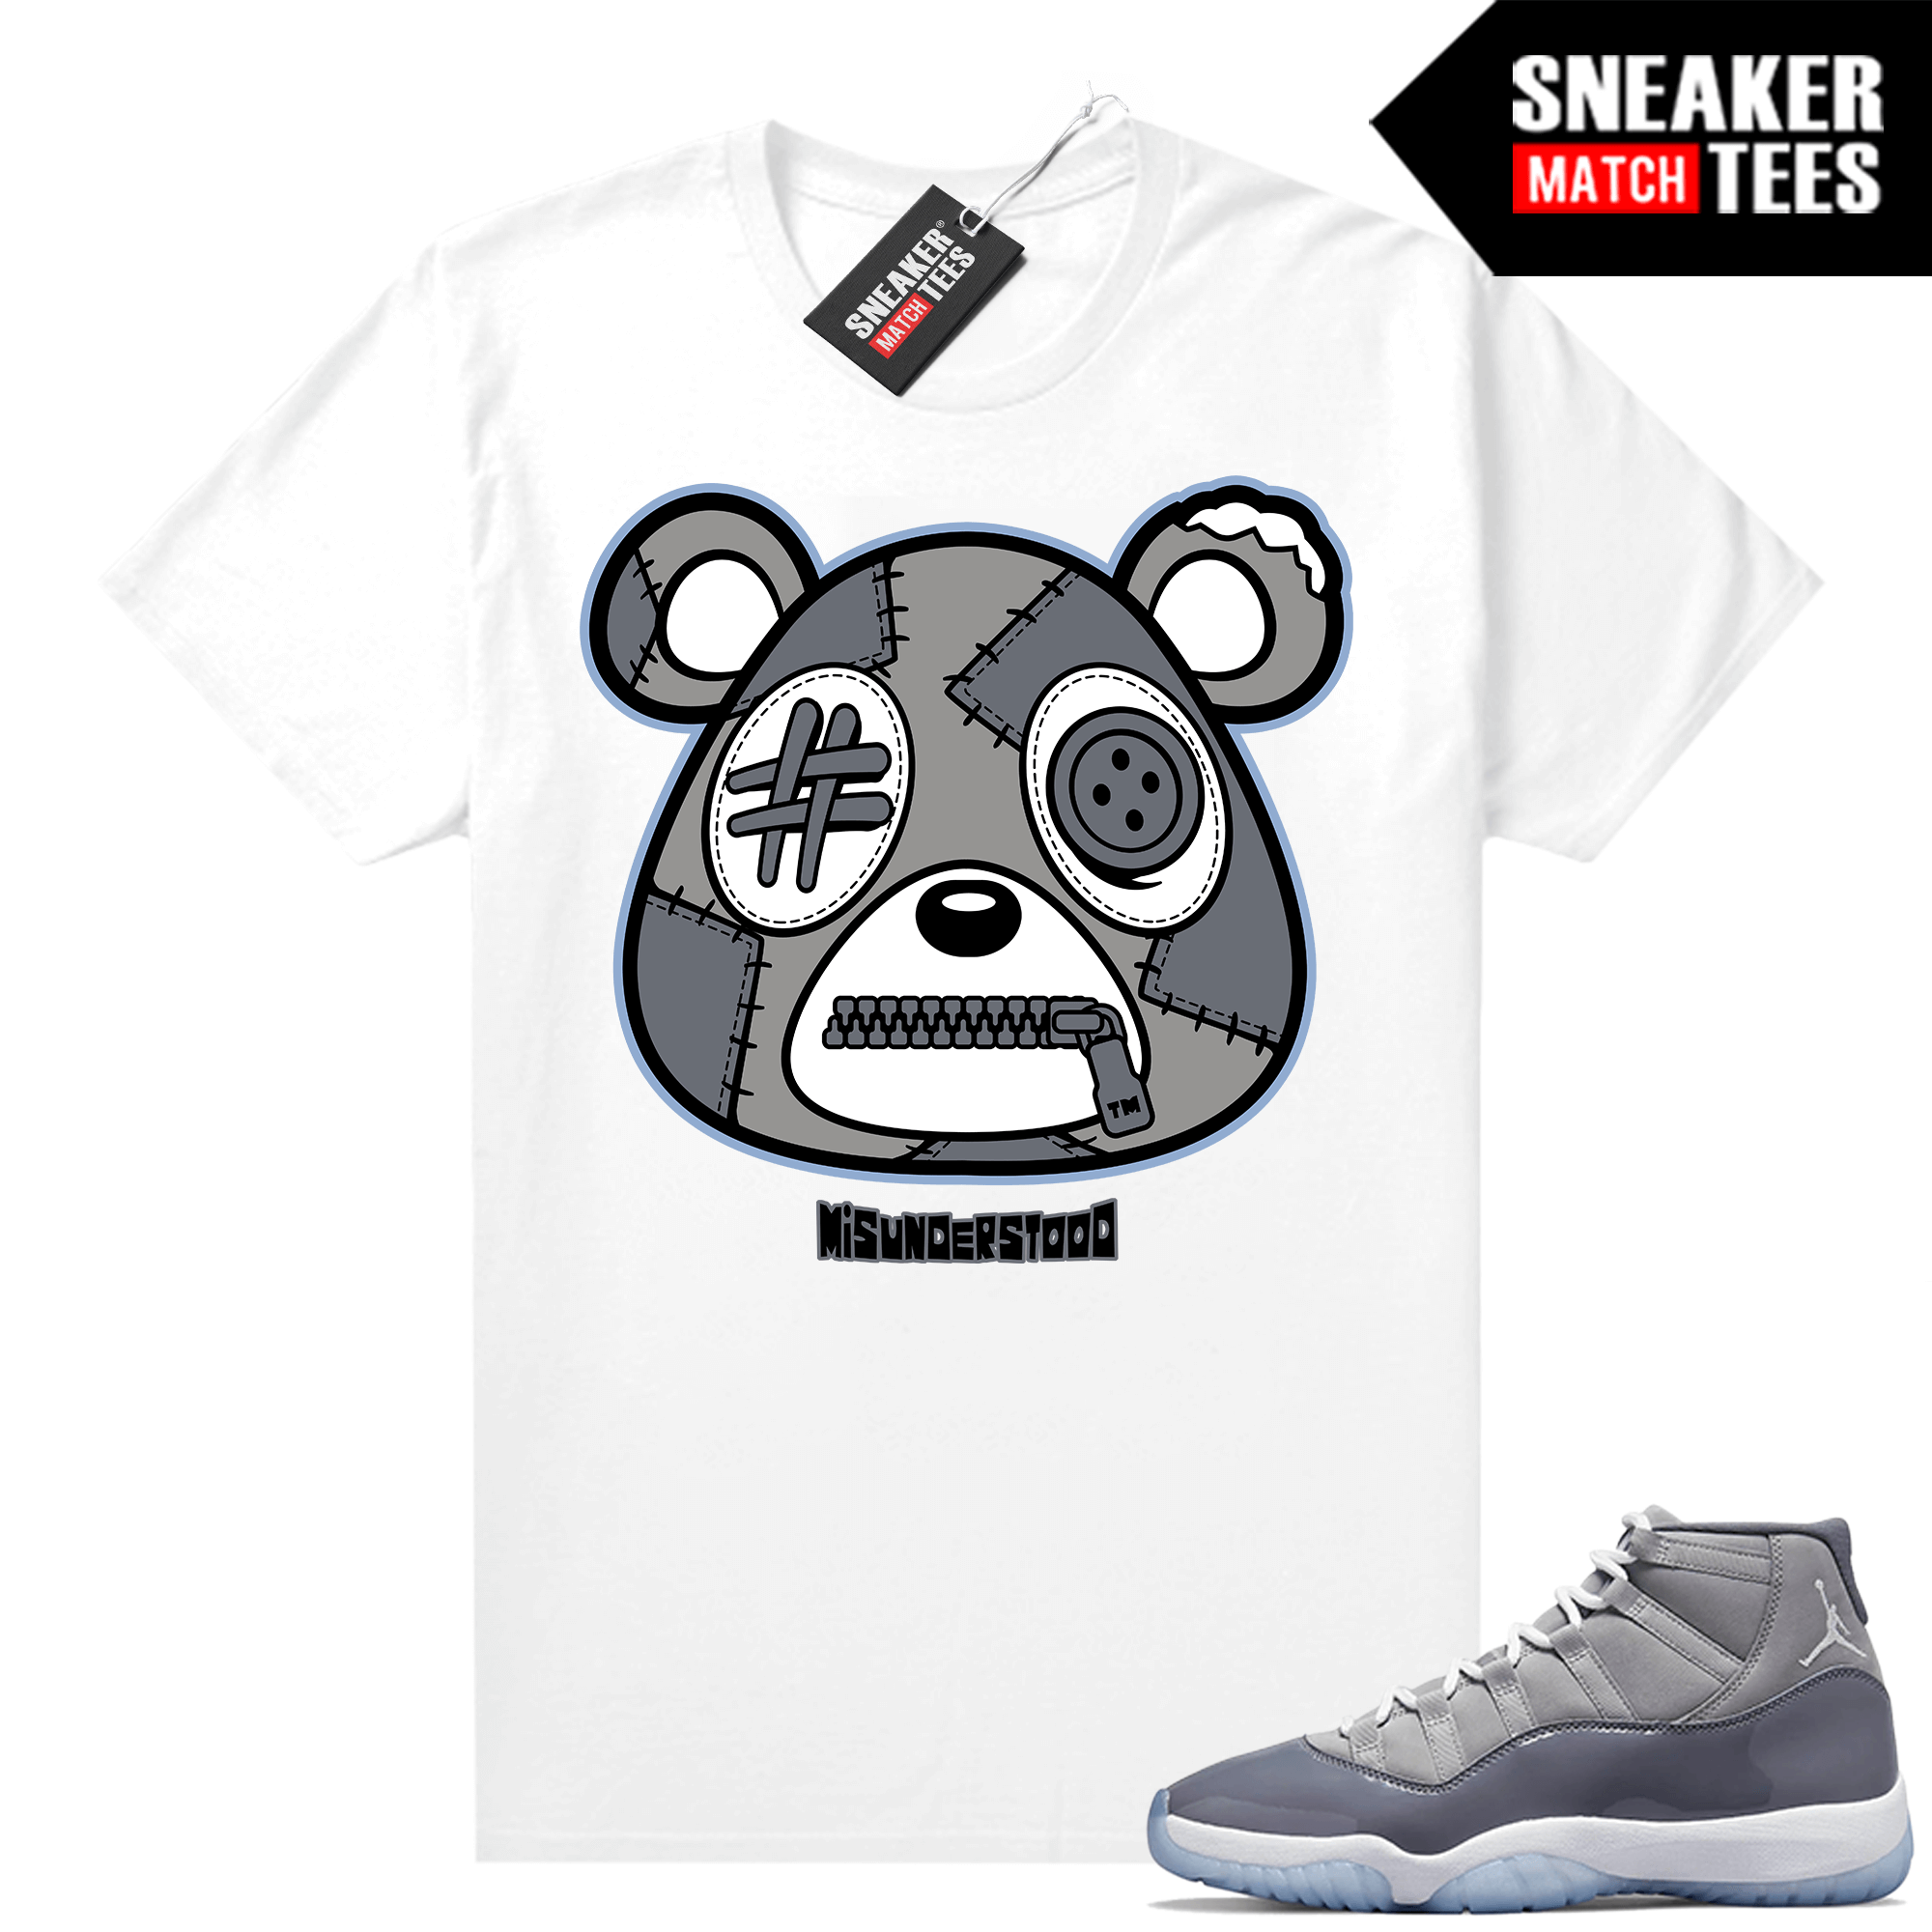 Cool Grey 11 Jordan Ariss-eu Sneakers Sale Online White Misunderstood Bear